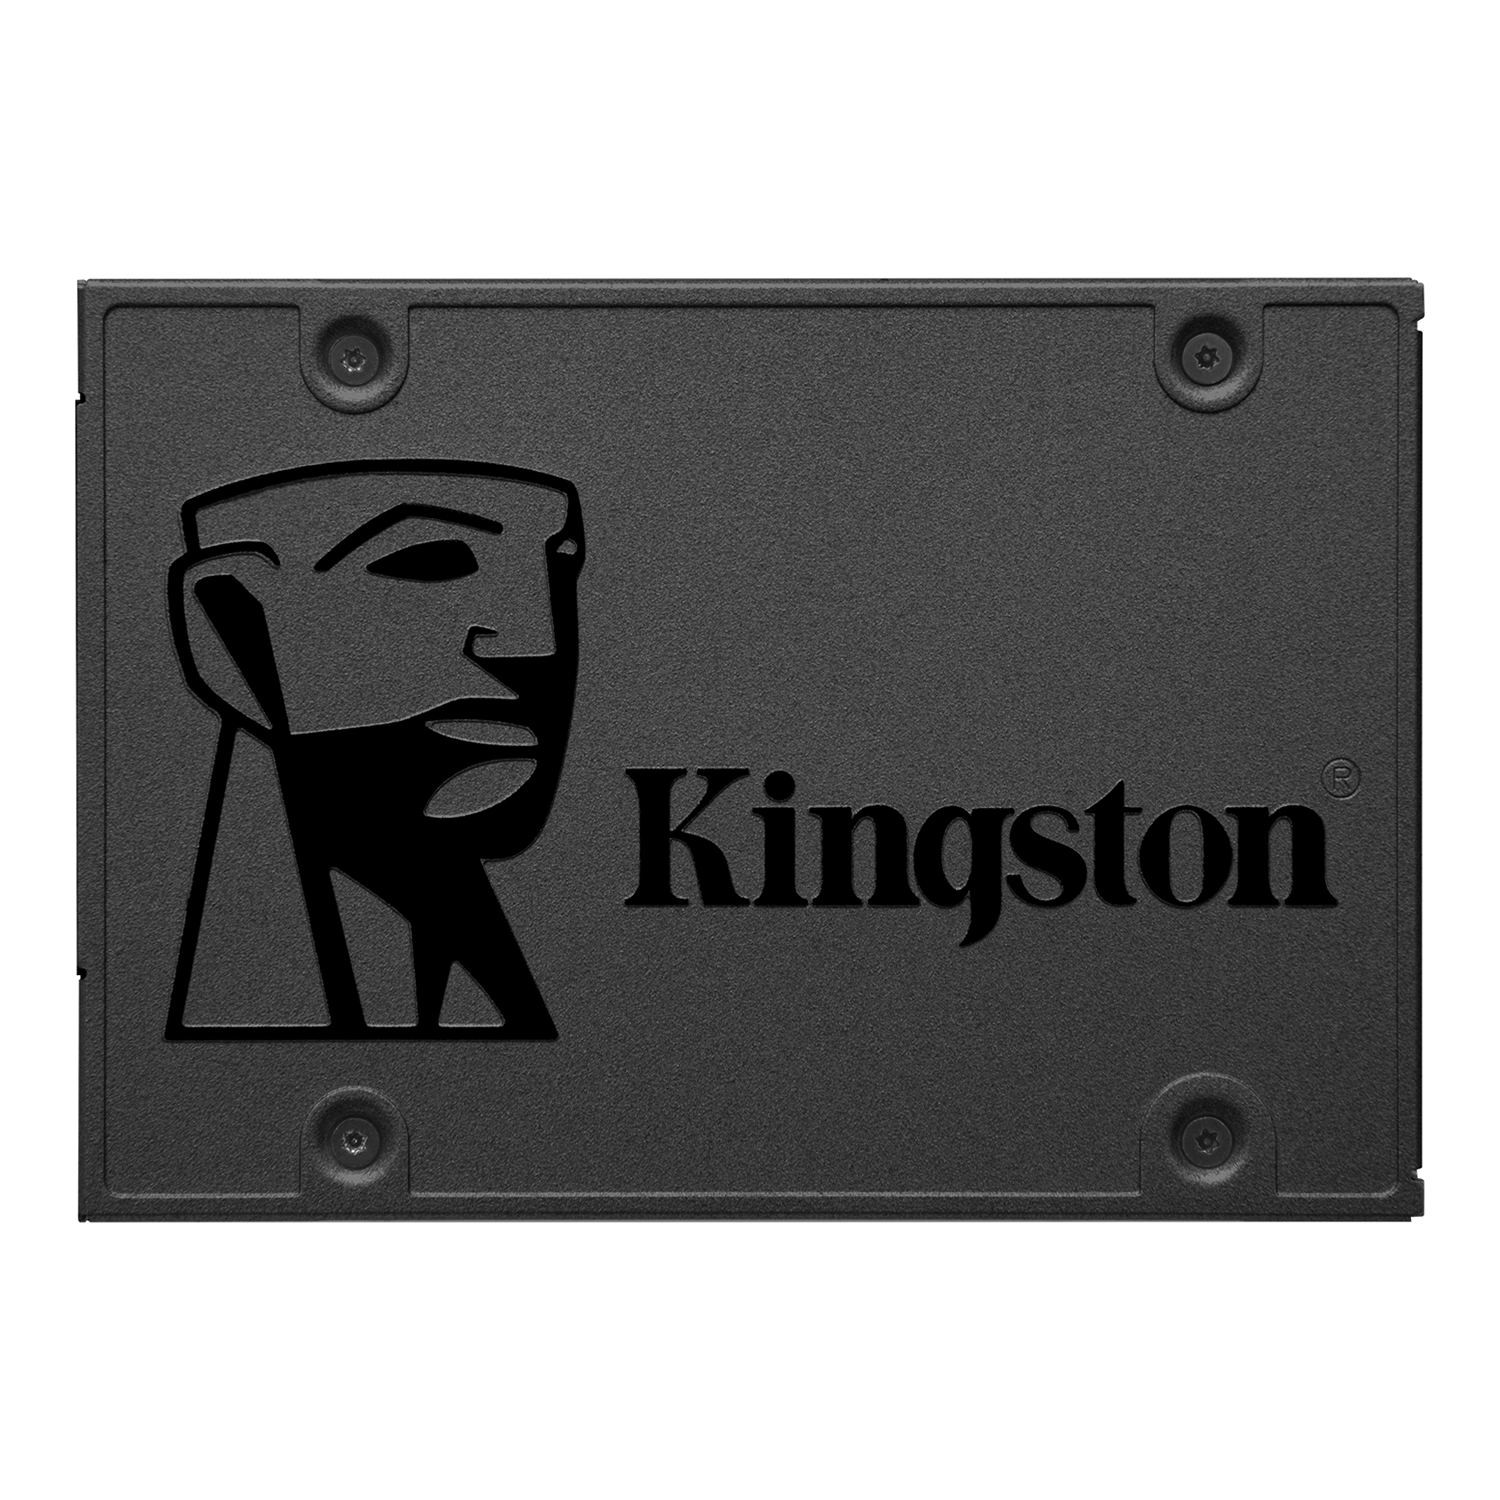 SSD Kingston 240GB A400 2,5